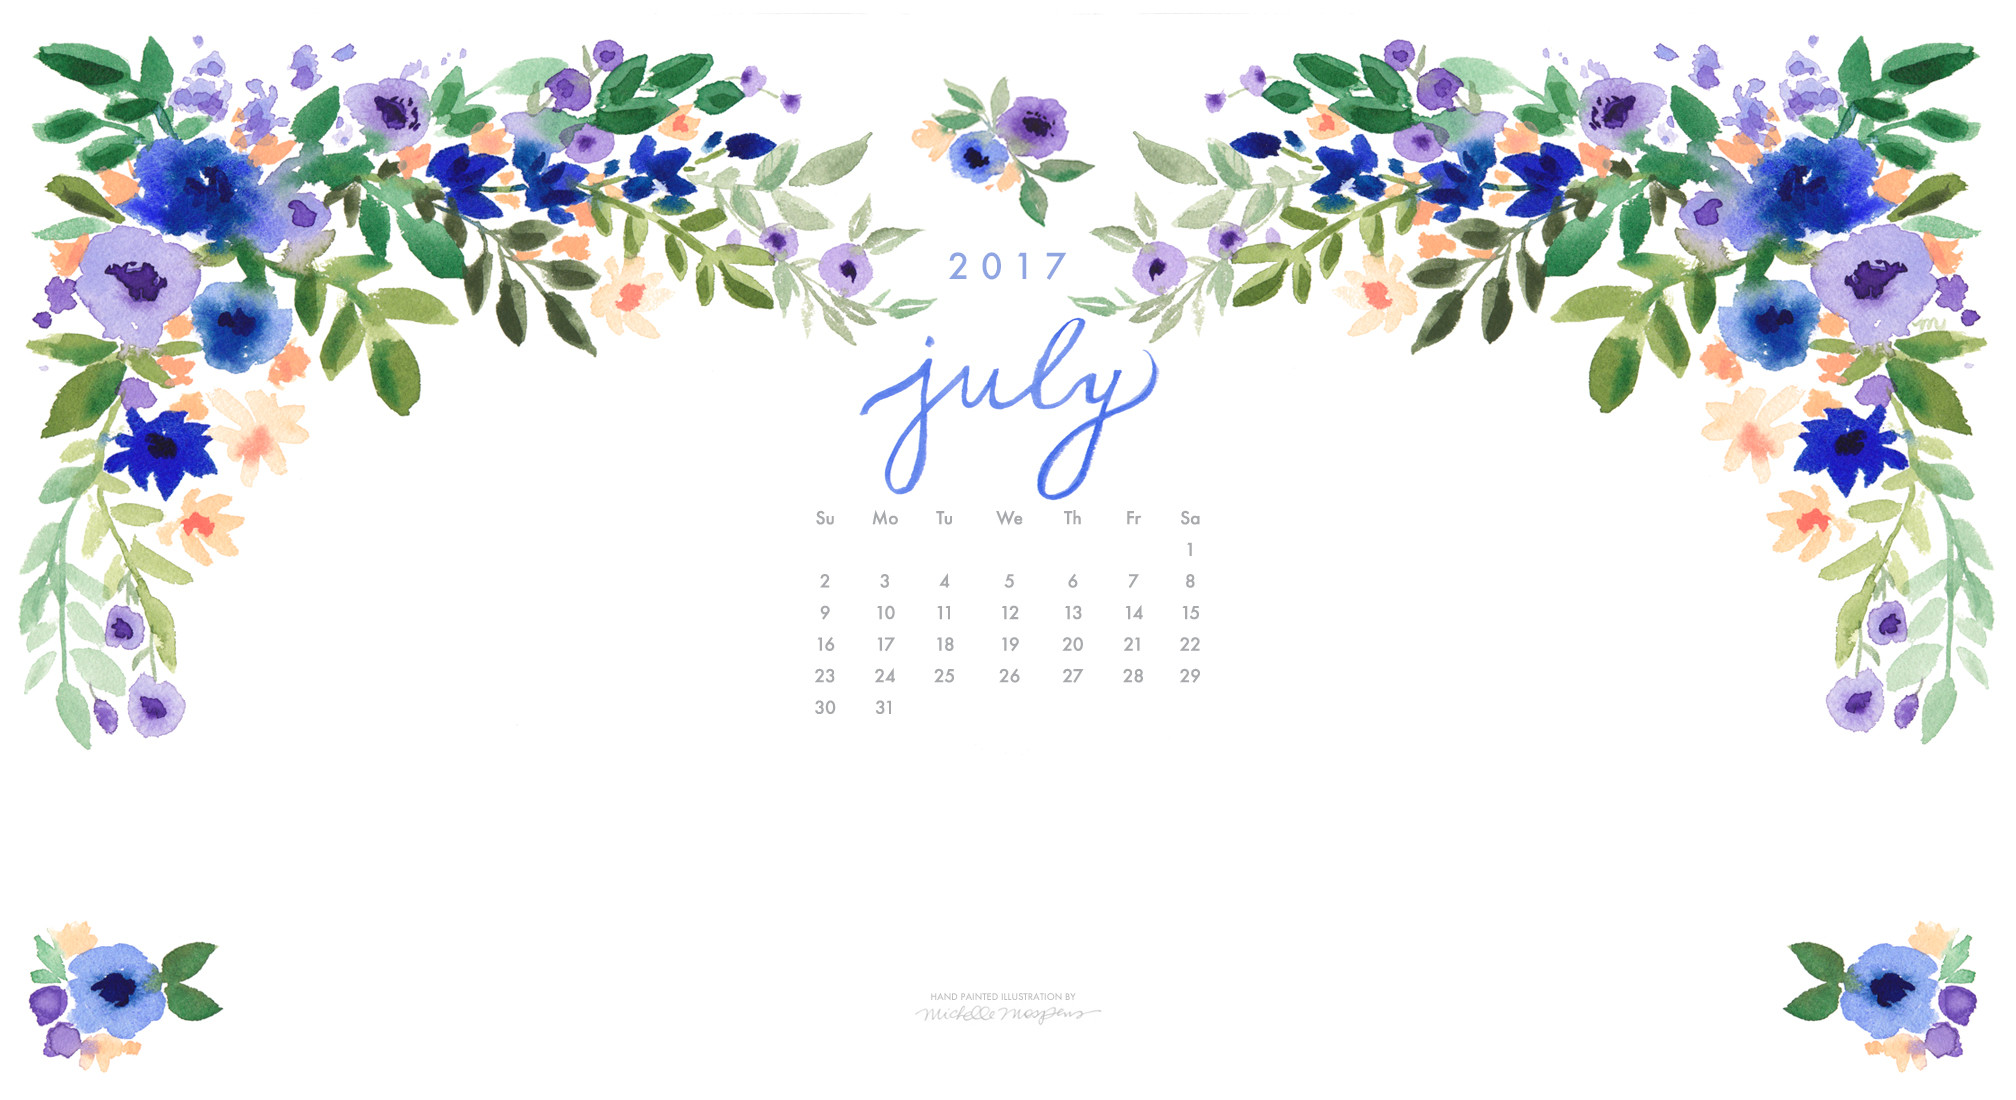 2016x1100 Pretty posy watercolor July 2017 calendar wallpaper for your computer. 100%  original art by